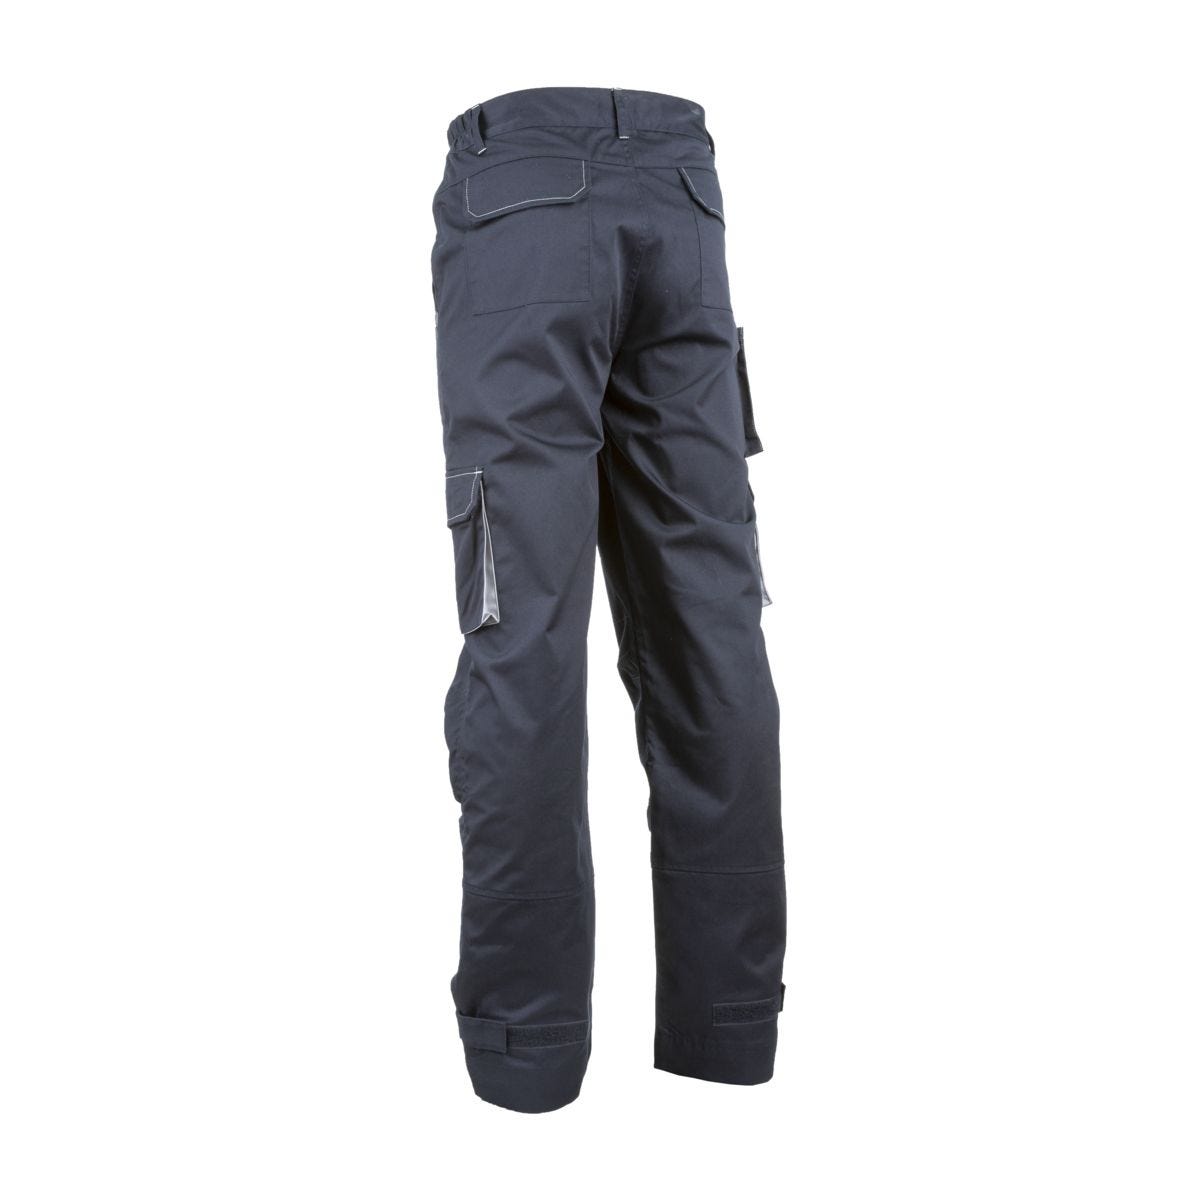 Pantalon NAVY II marine/gris - COVERGUARD - Taille M 1